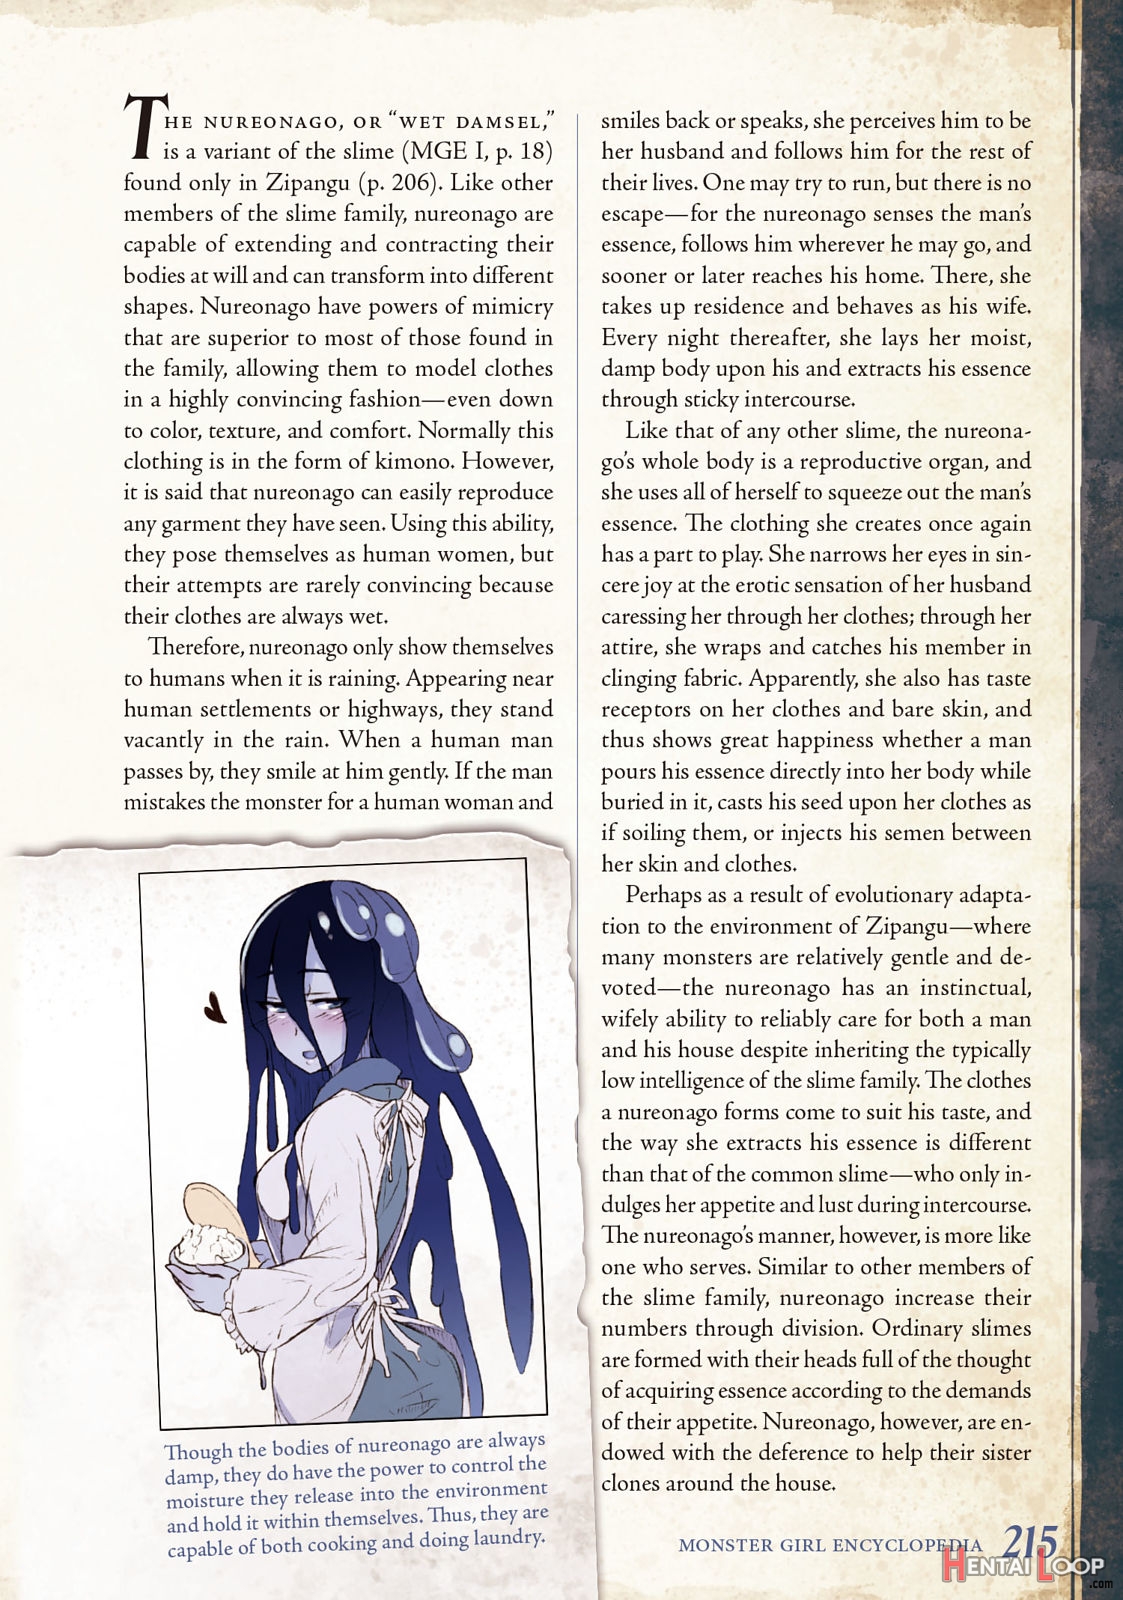 Monster Girl Encyclopedia Vol. 2 page 216